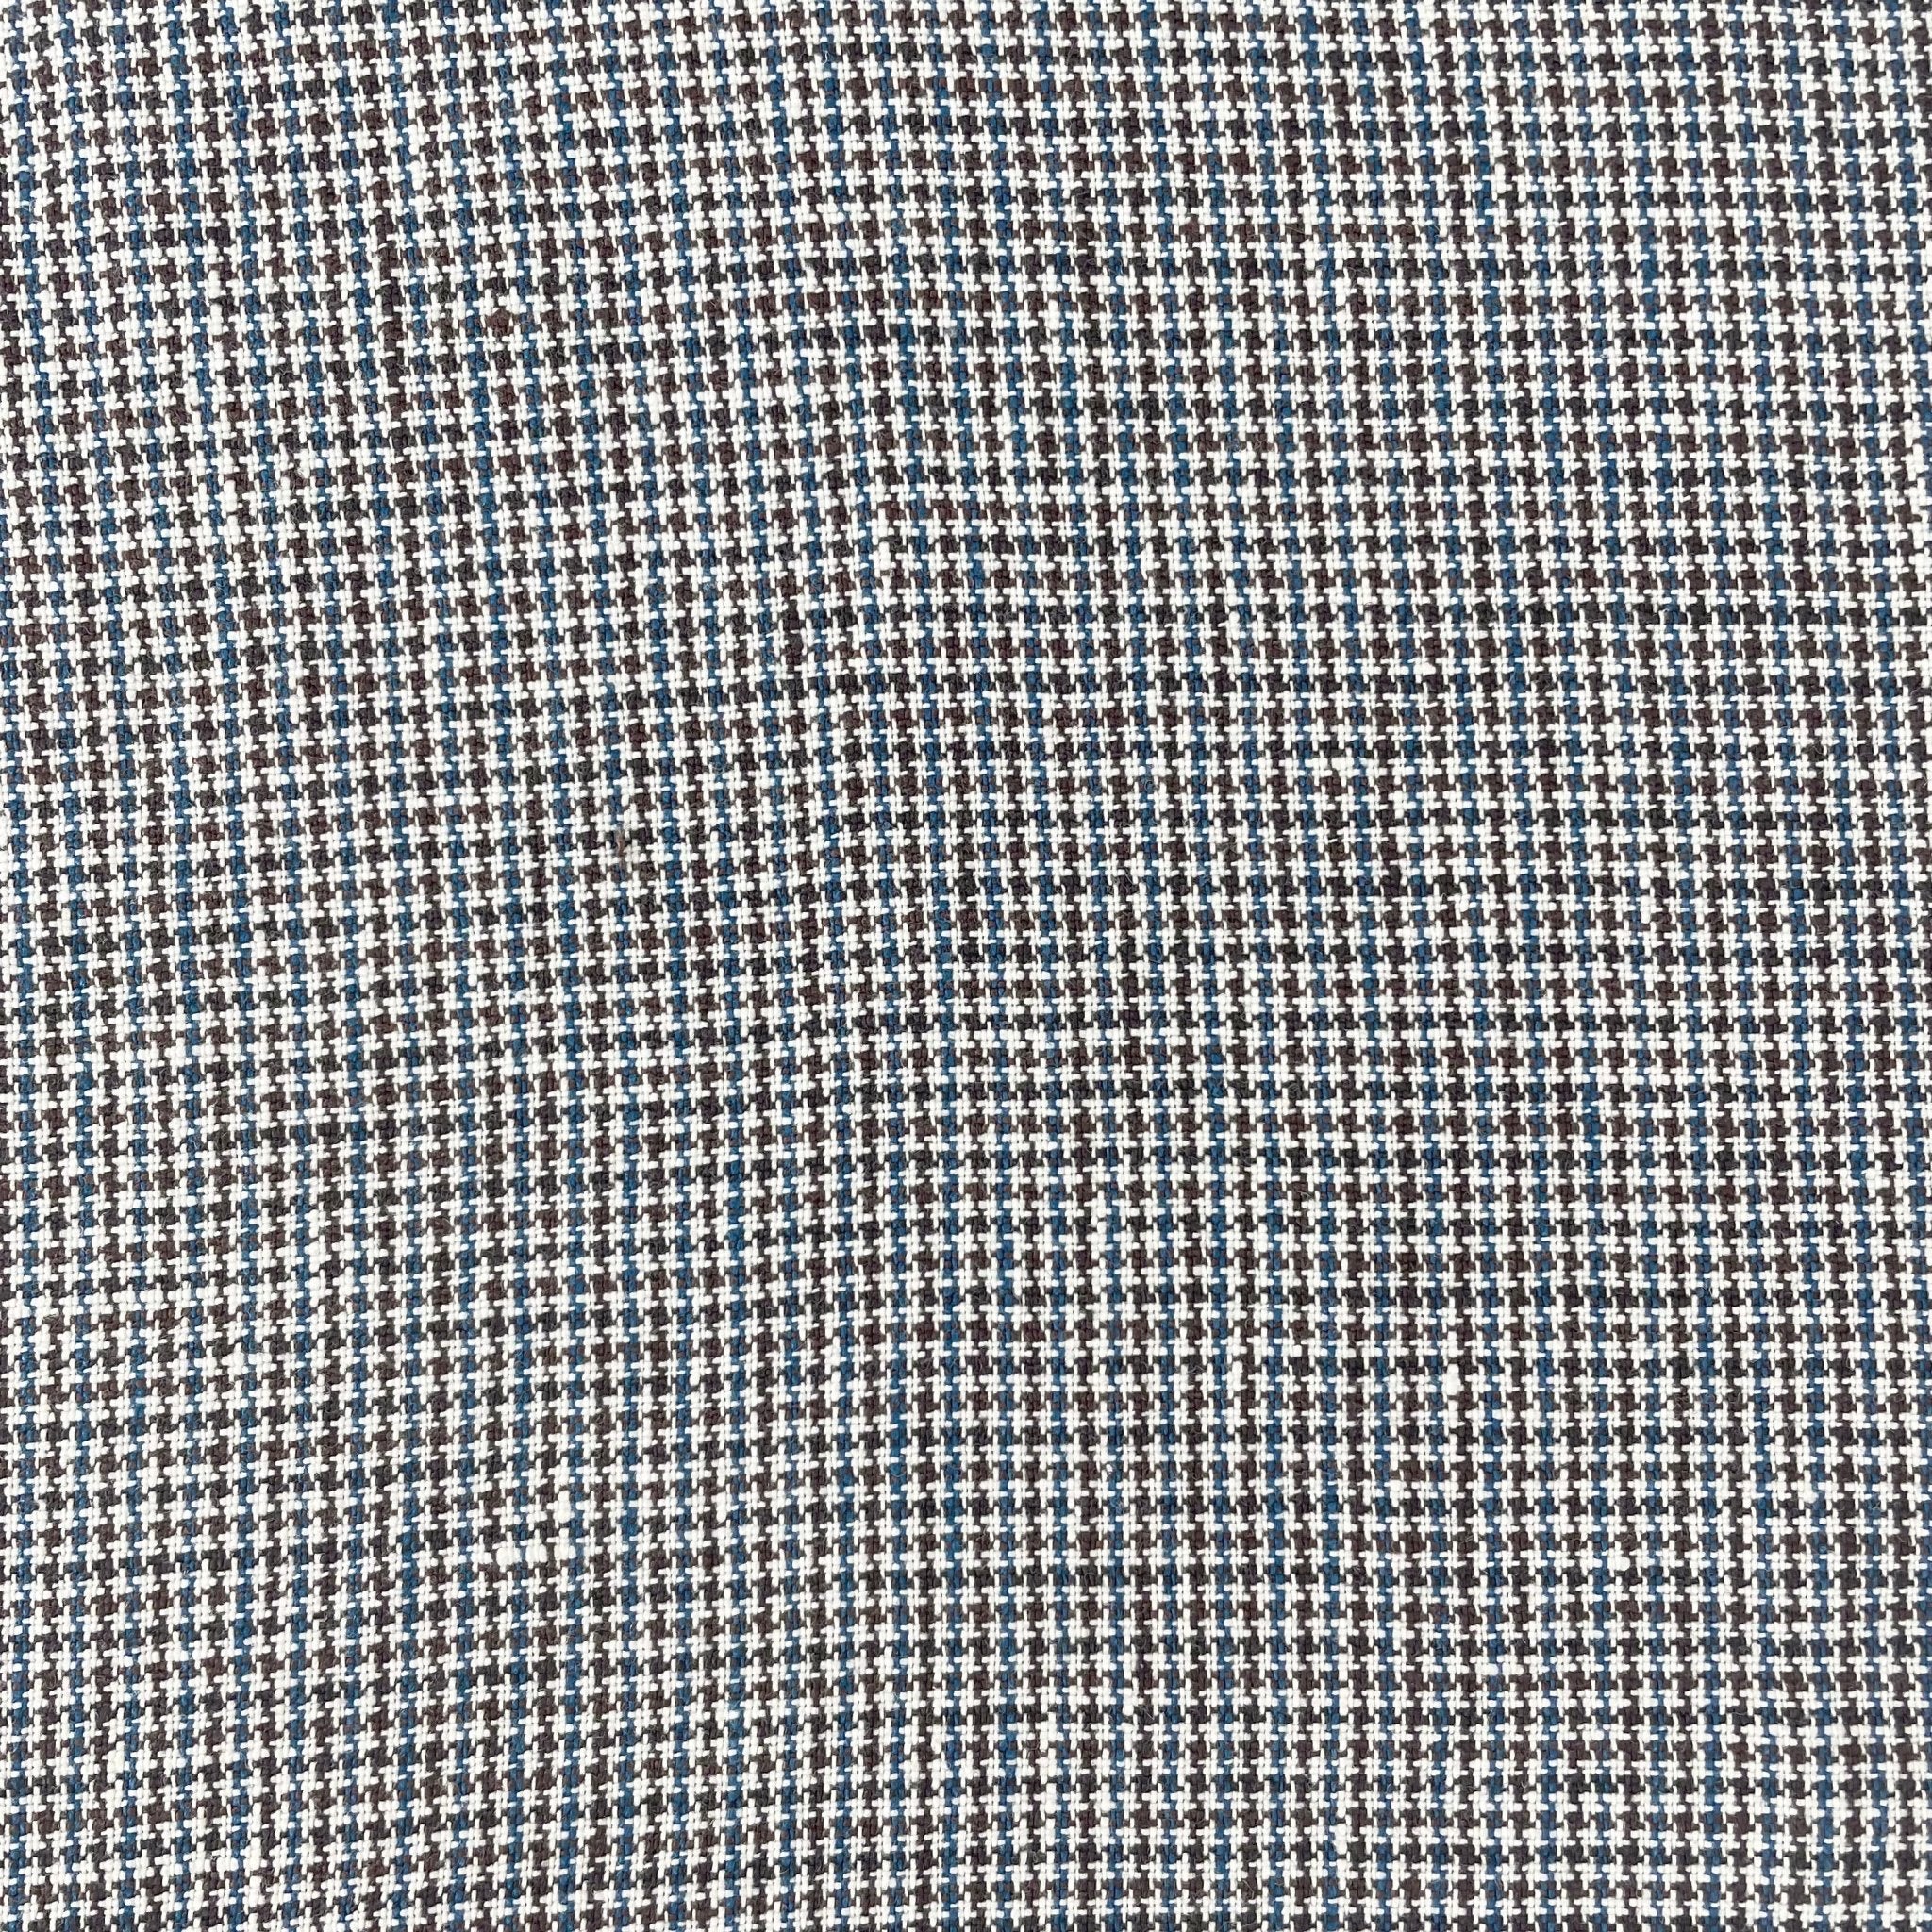 Linen Star Check Fabric 6751 - The Linen Lab - Blue